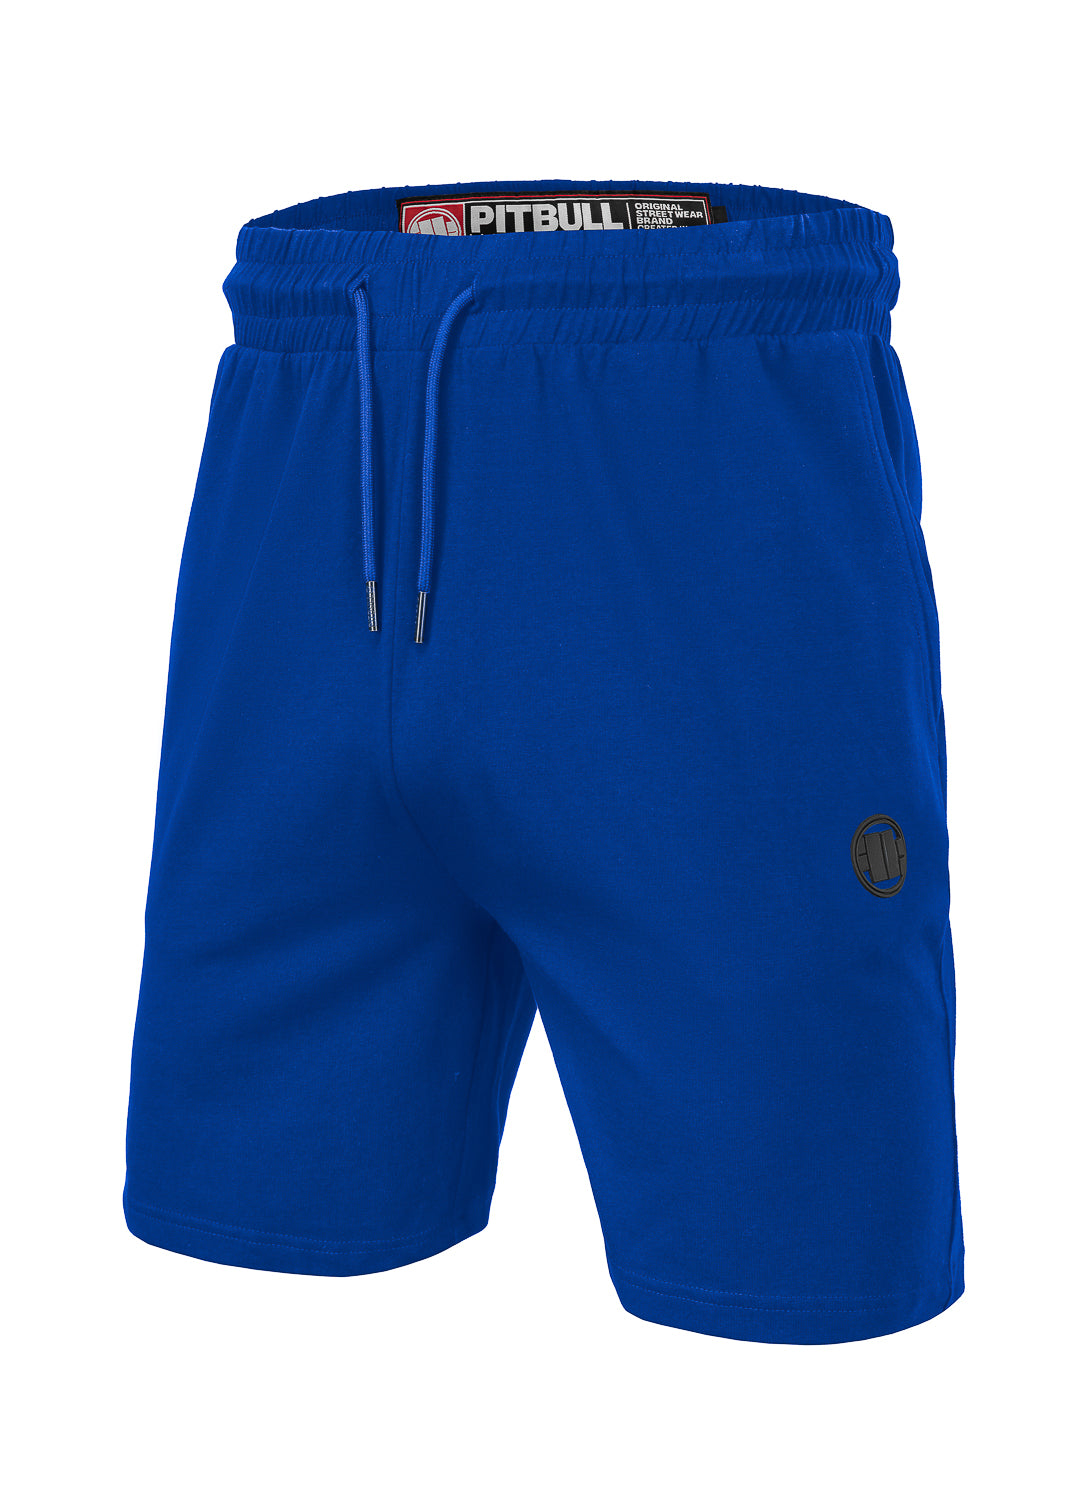 DURANGO Spandex Royal Blue Shorts.